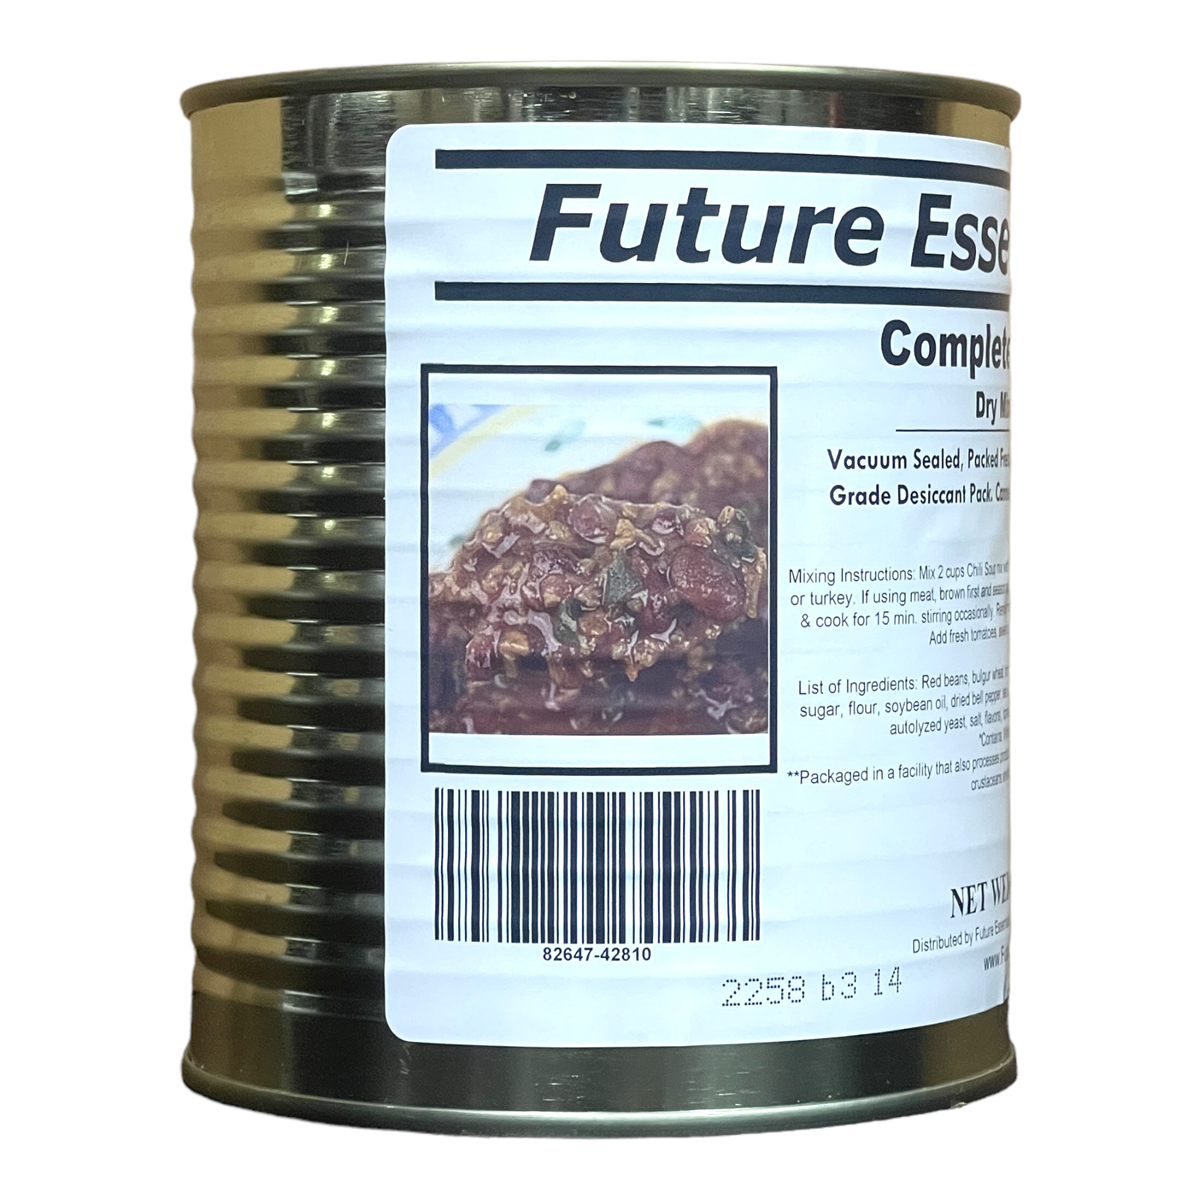 Future Essentials Dry Chili Soup Mix